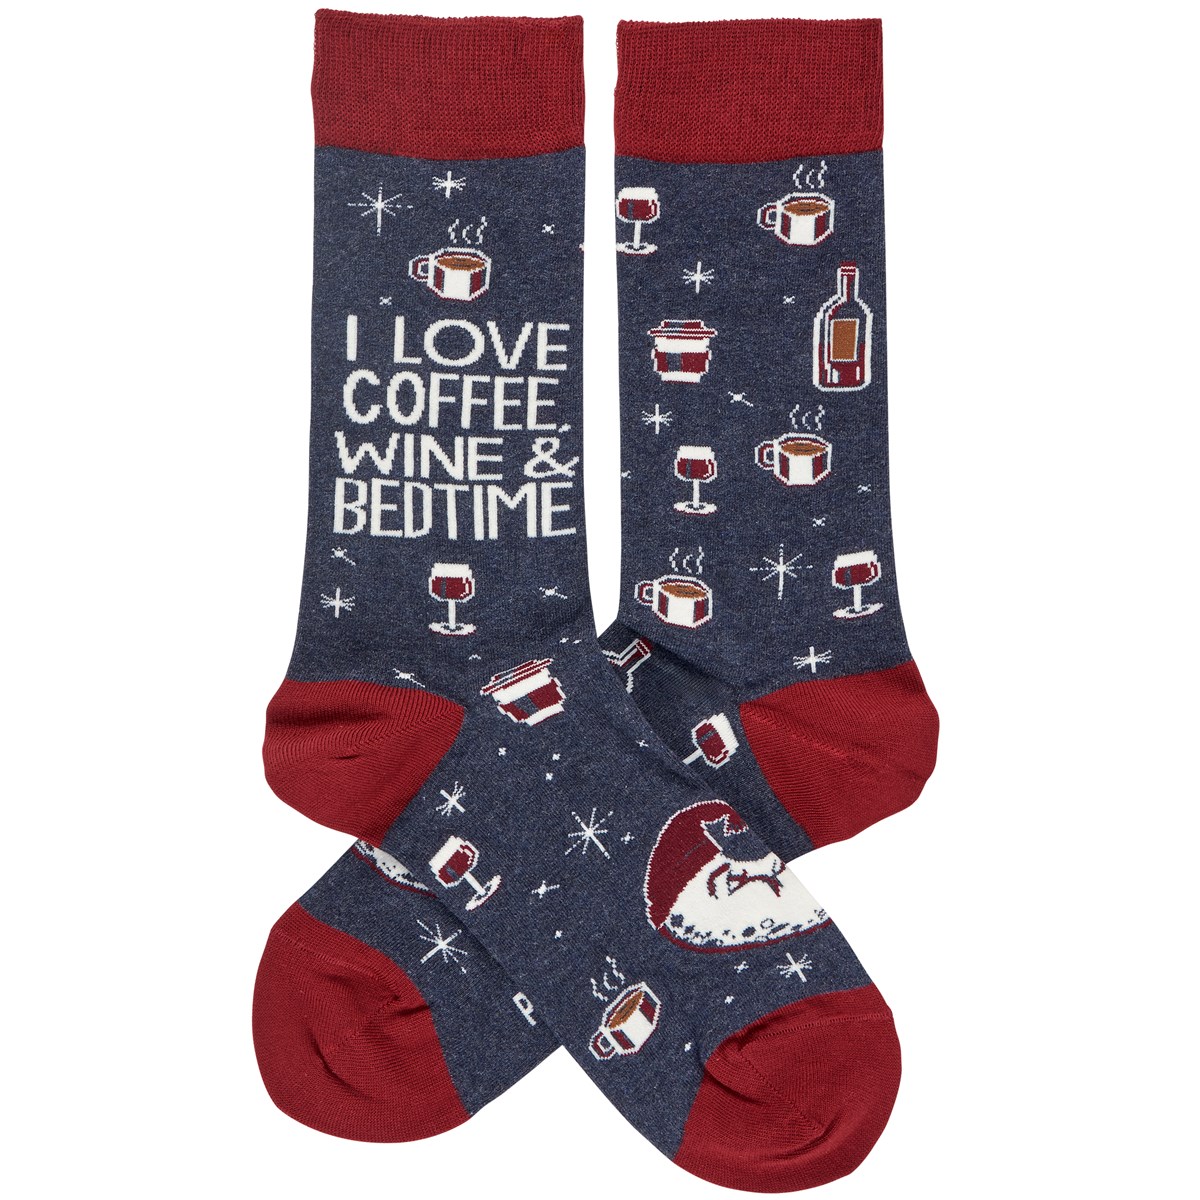 Coffee, Wine & Bedtime Socks - Cotton, Nylon, Spandex